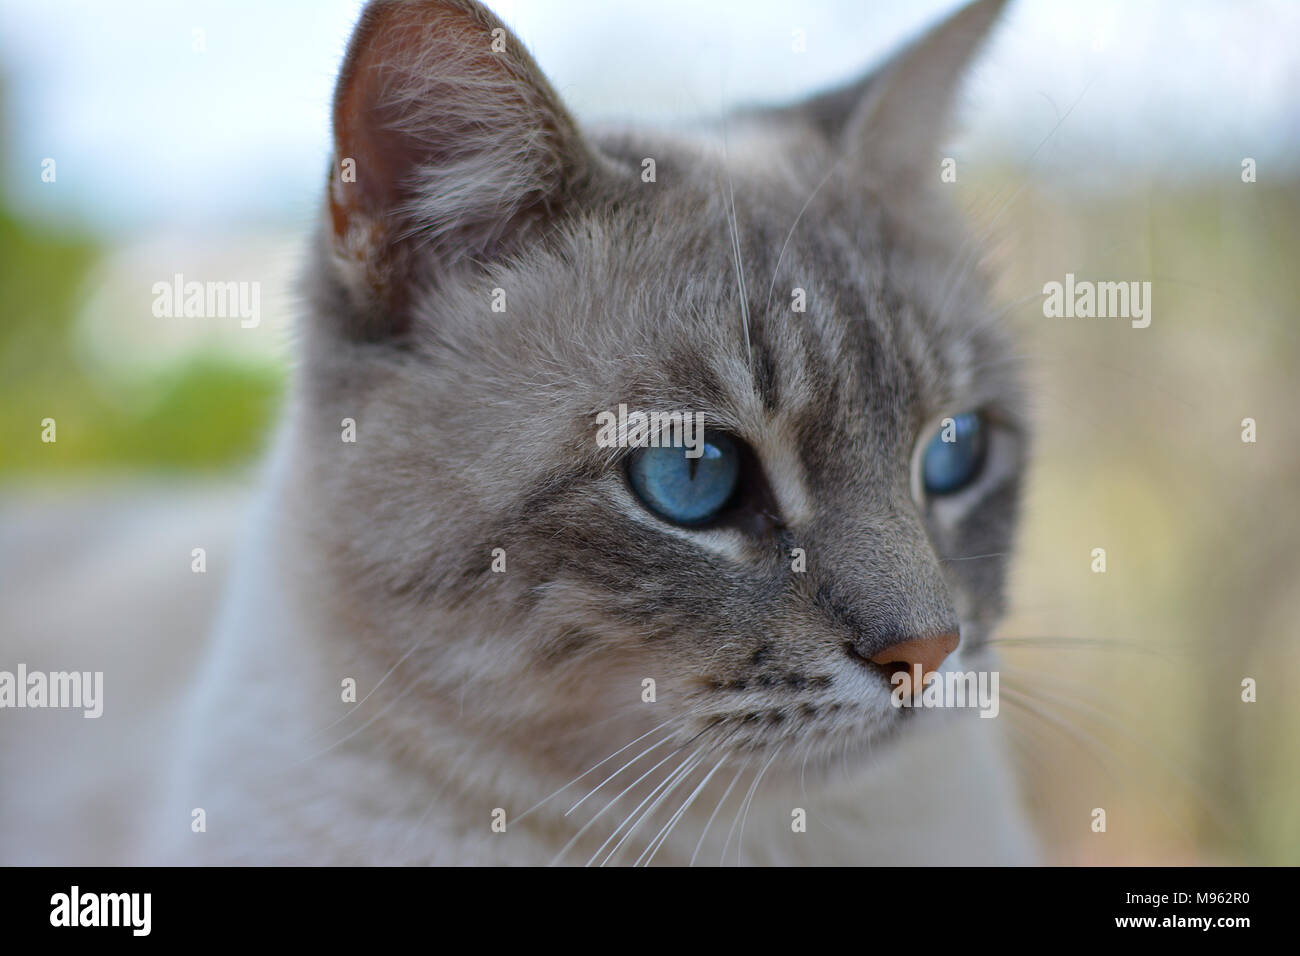 Portrait Adorable graue Katze mit blauen Augen Stockfotografie - Alamy